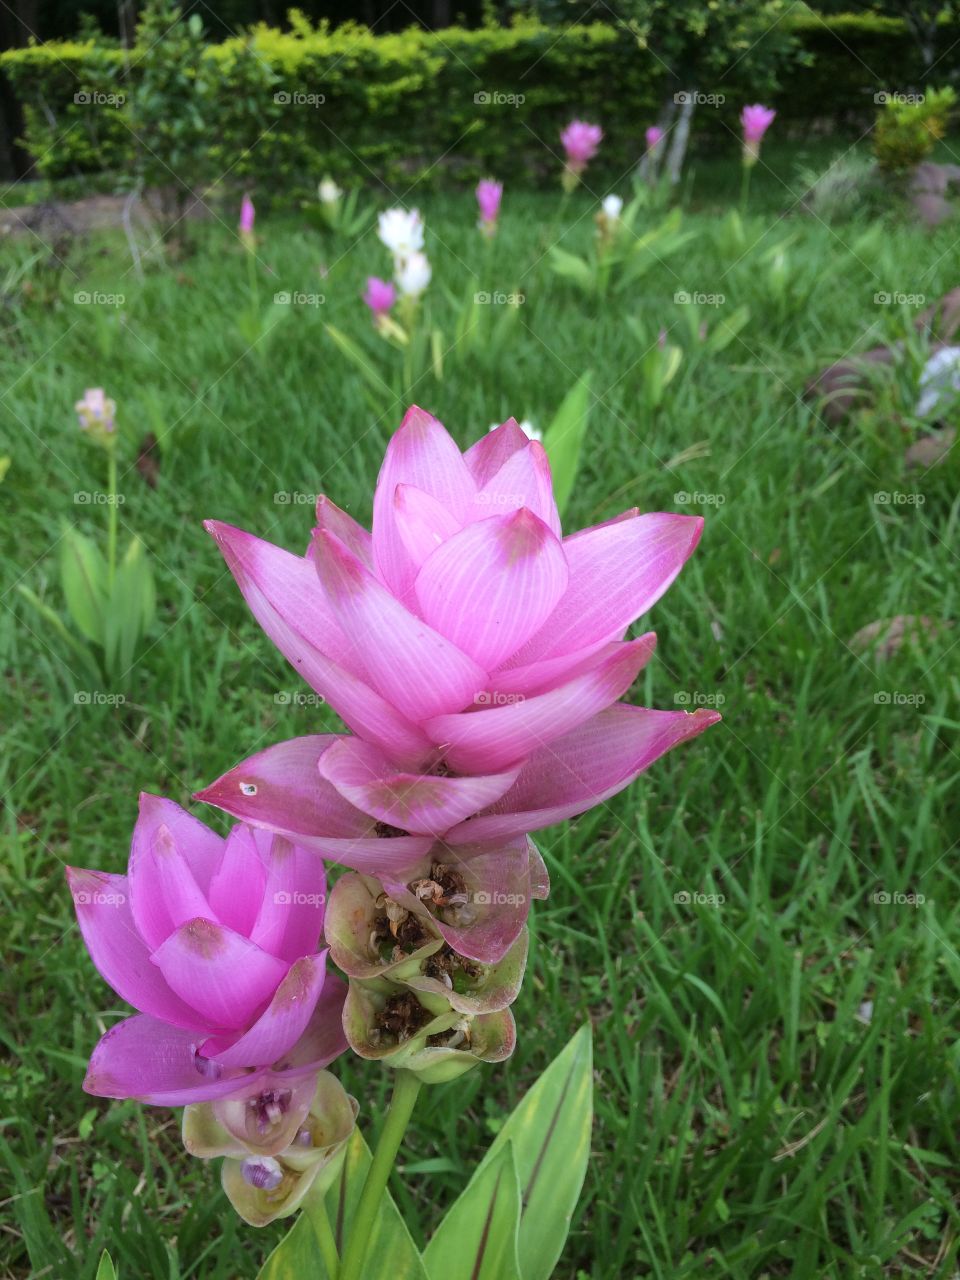 
Krachai flower are booming